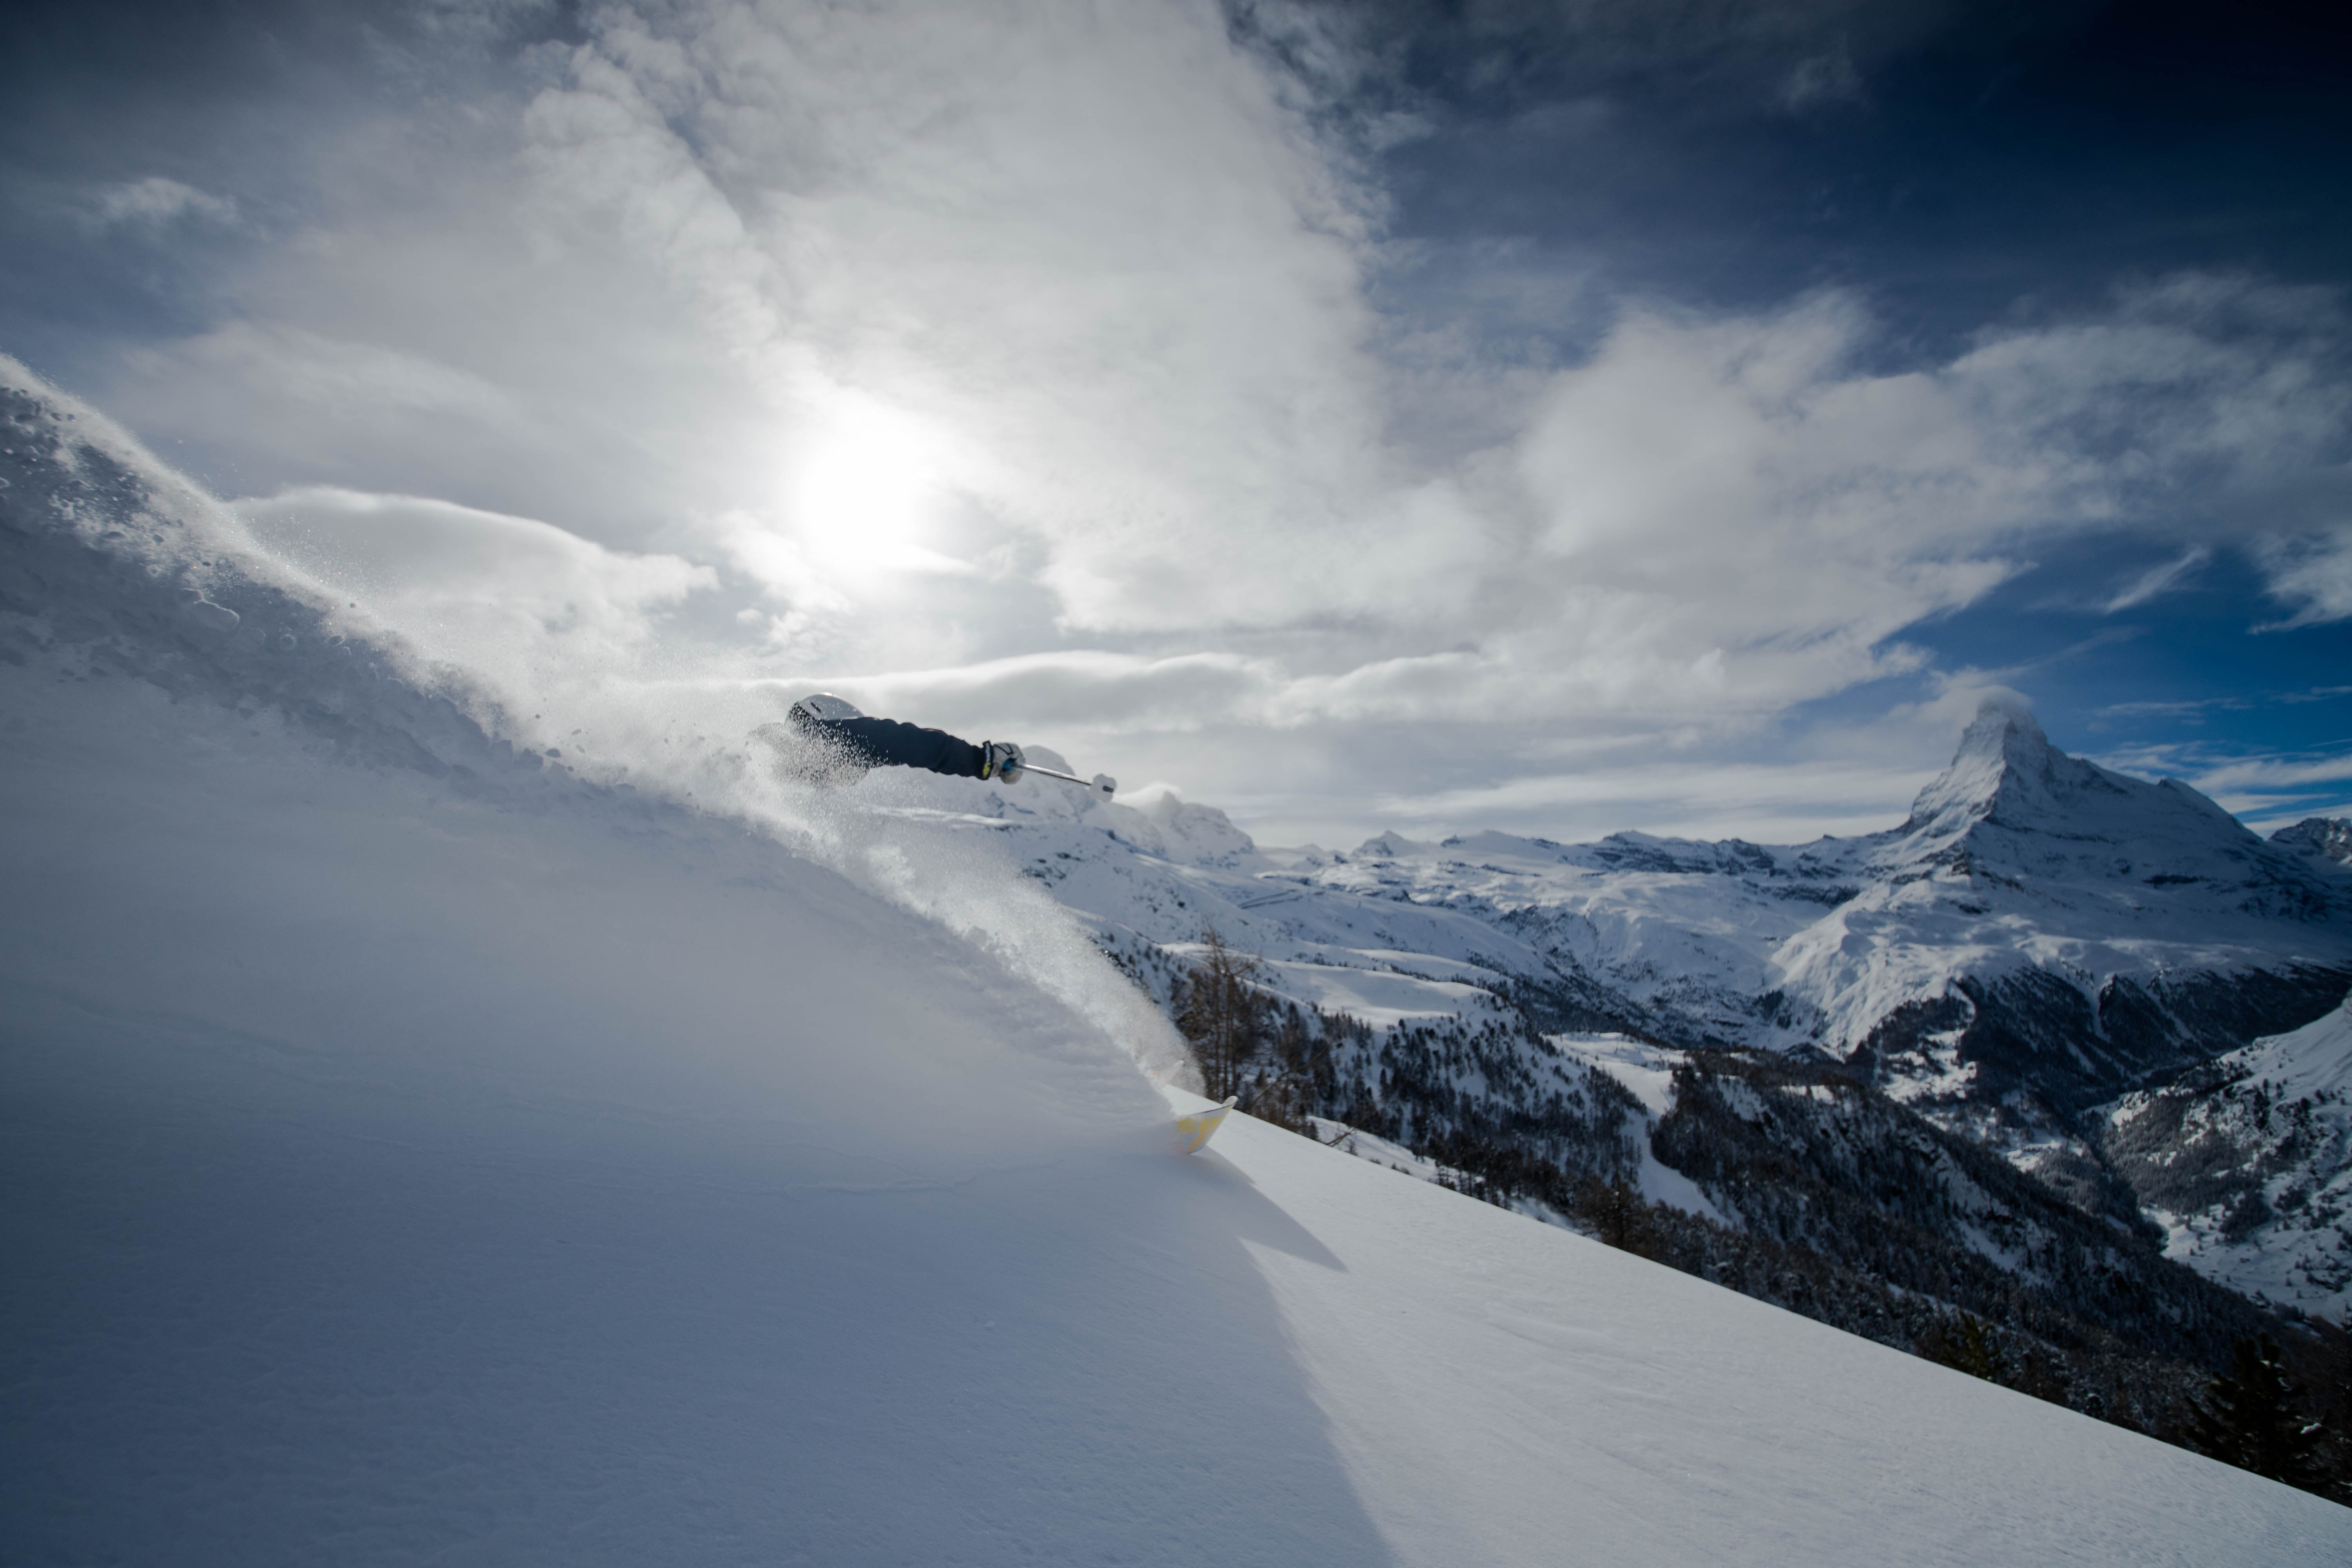 off piste skiing lessons in Stoked snowsport school, Zermatt